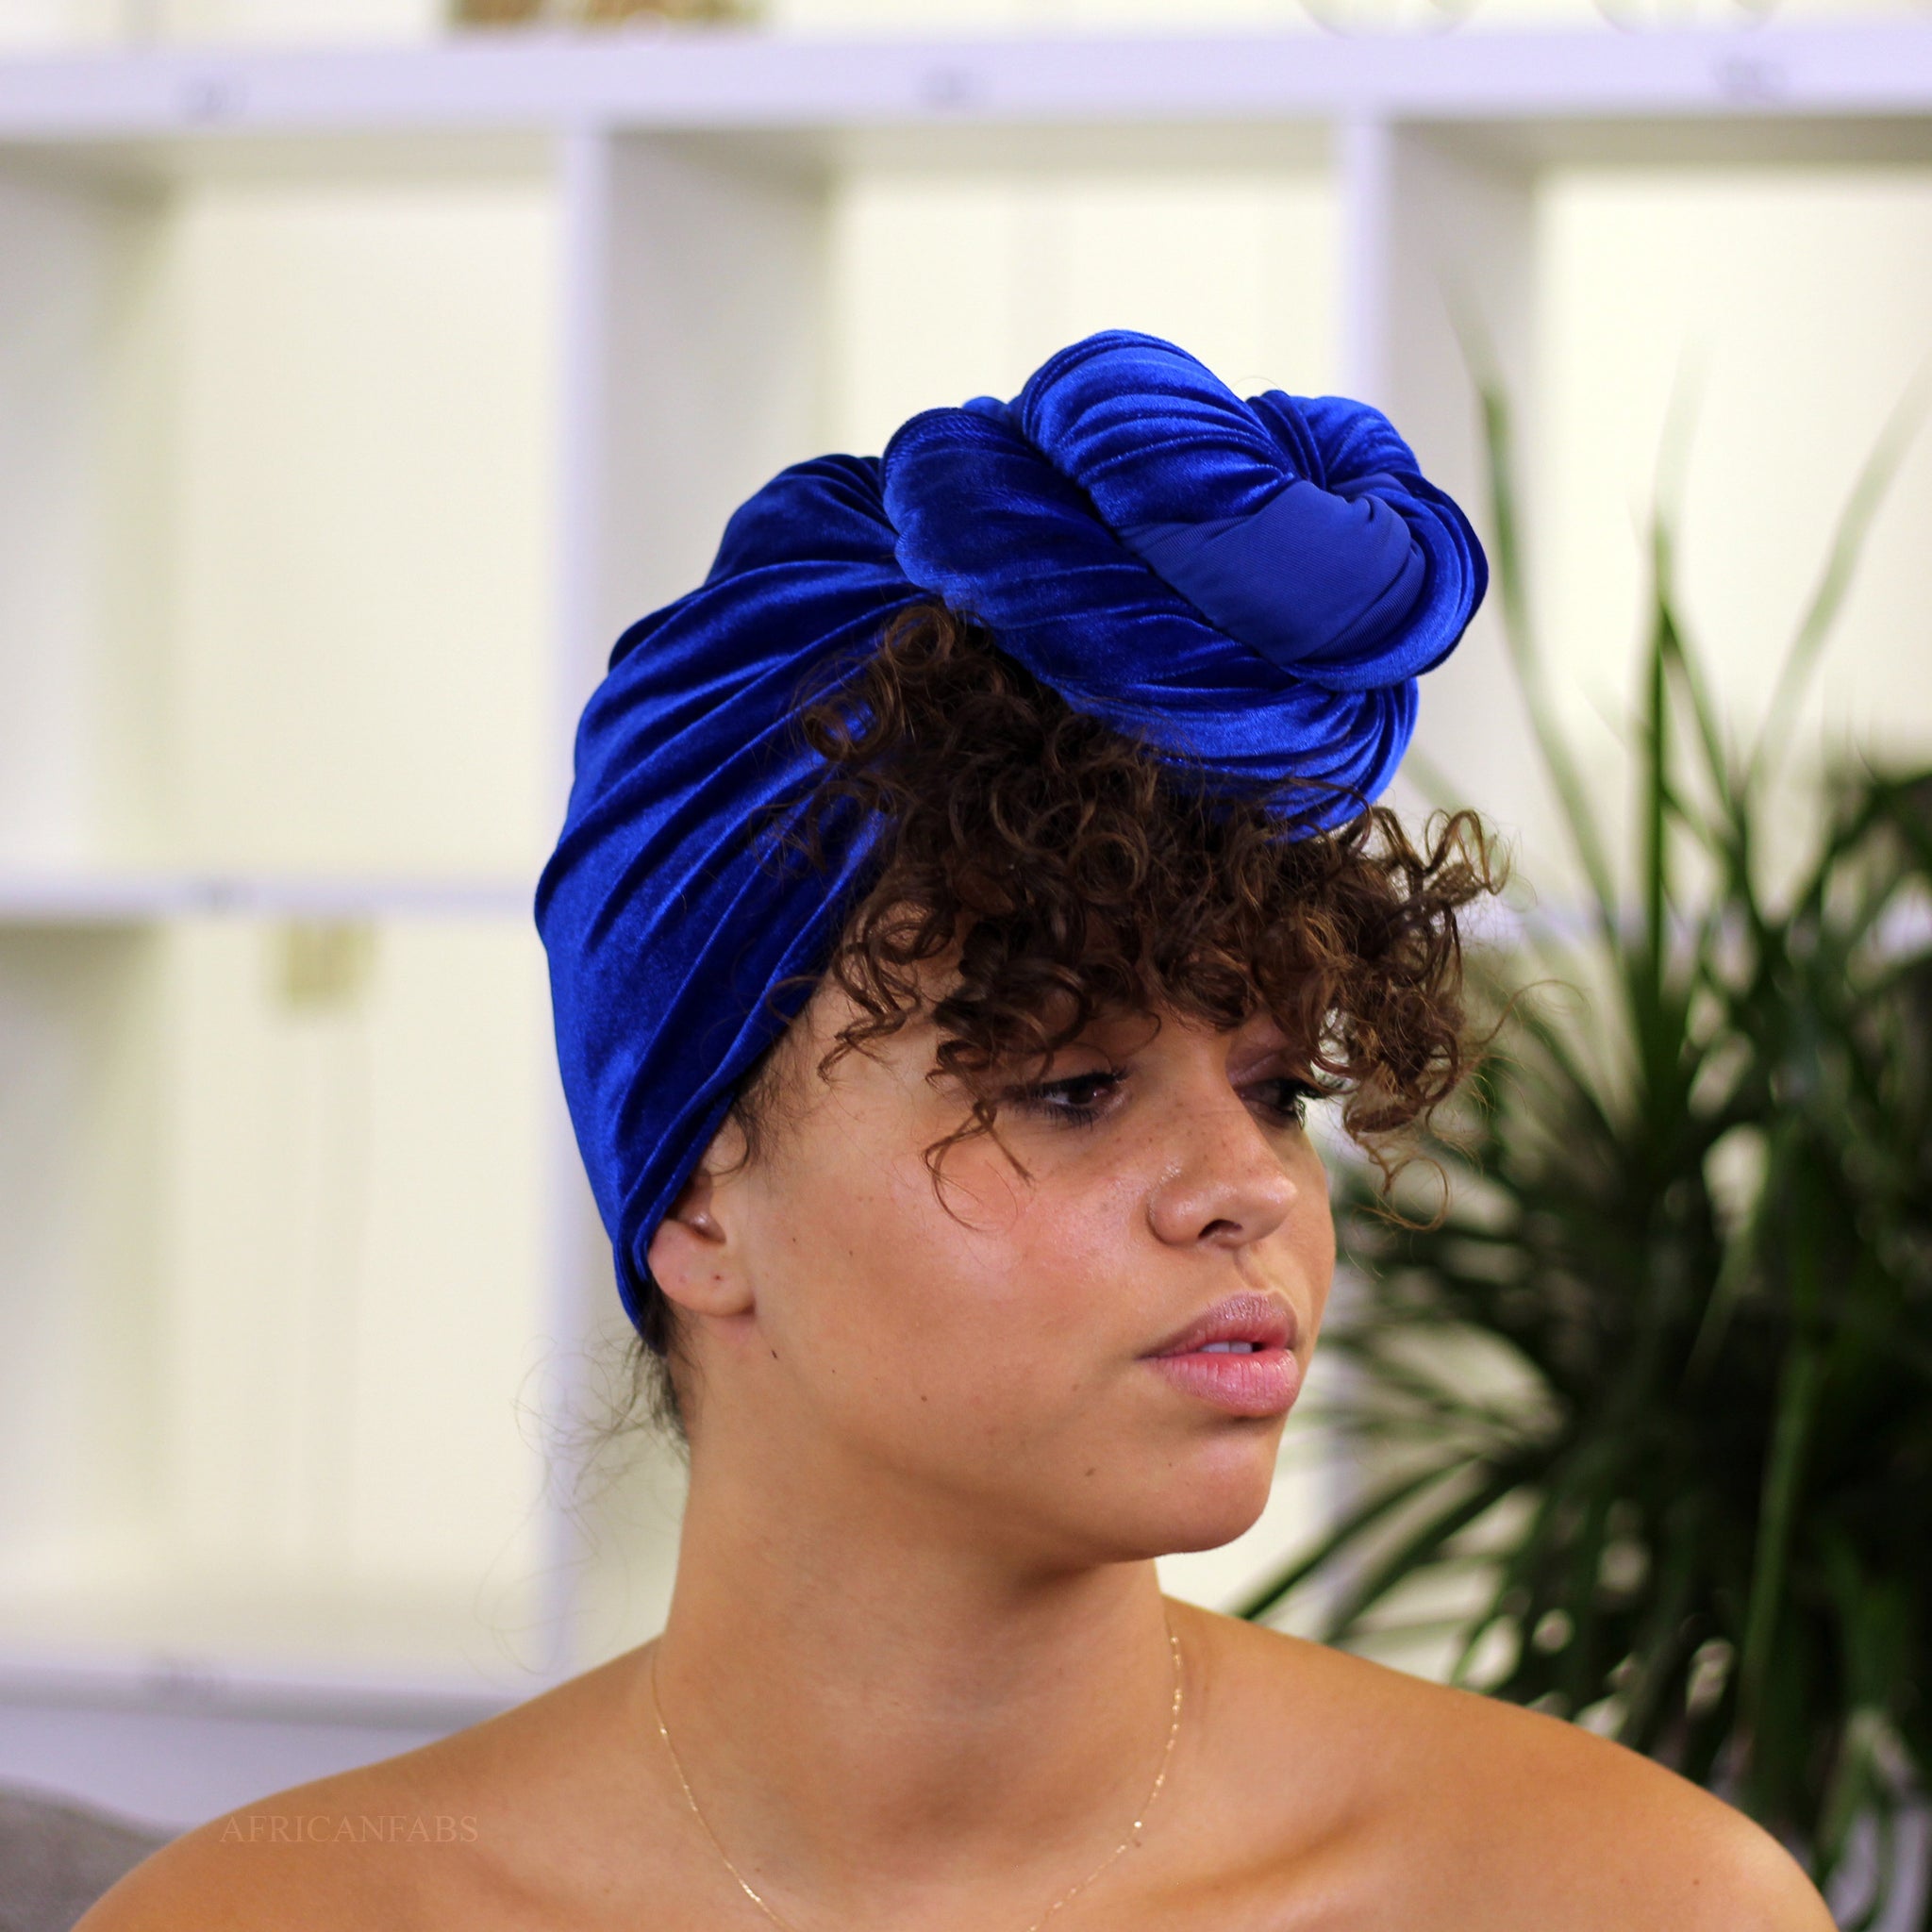 Fluwelen hoofddoek / Velvet headwrap - Royal blauw